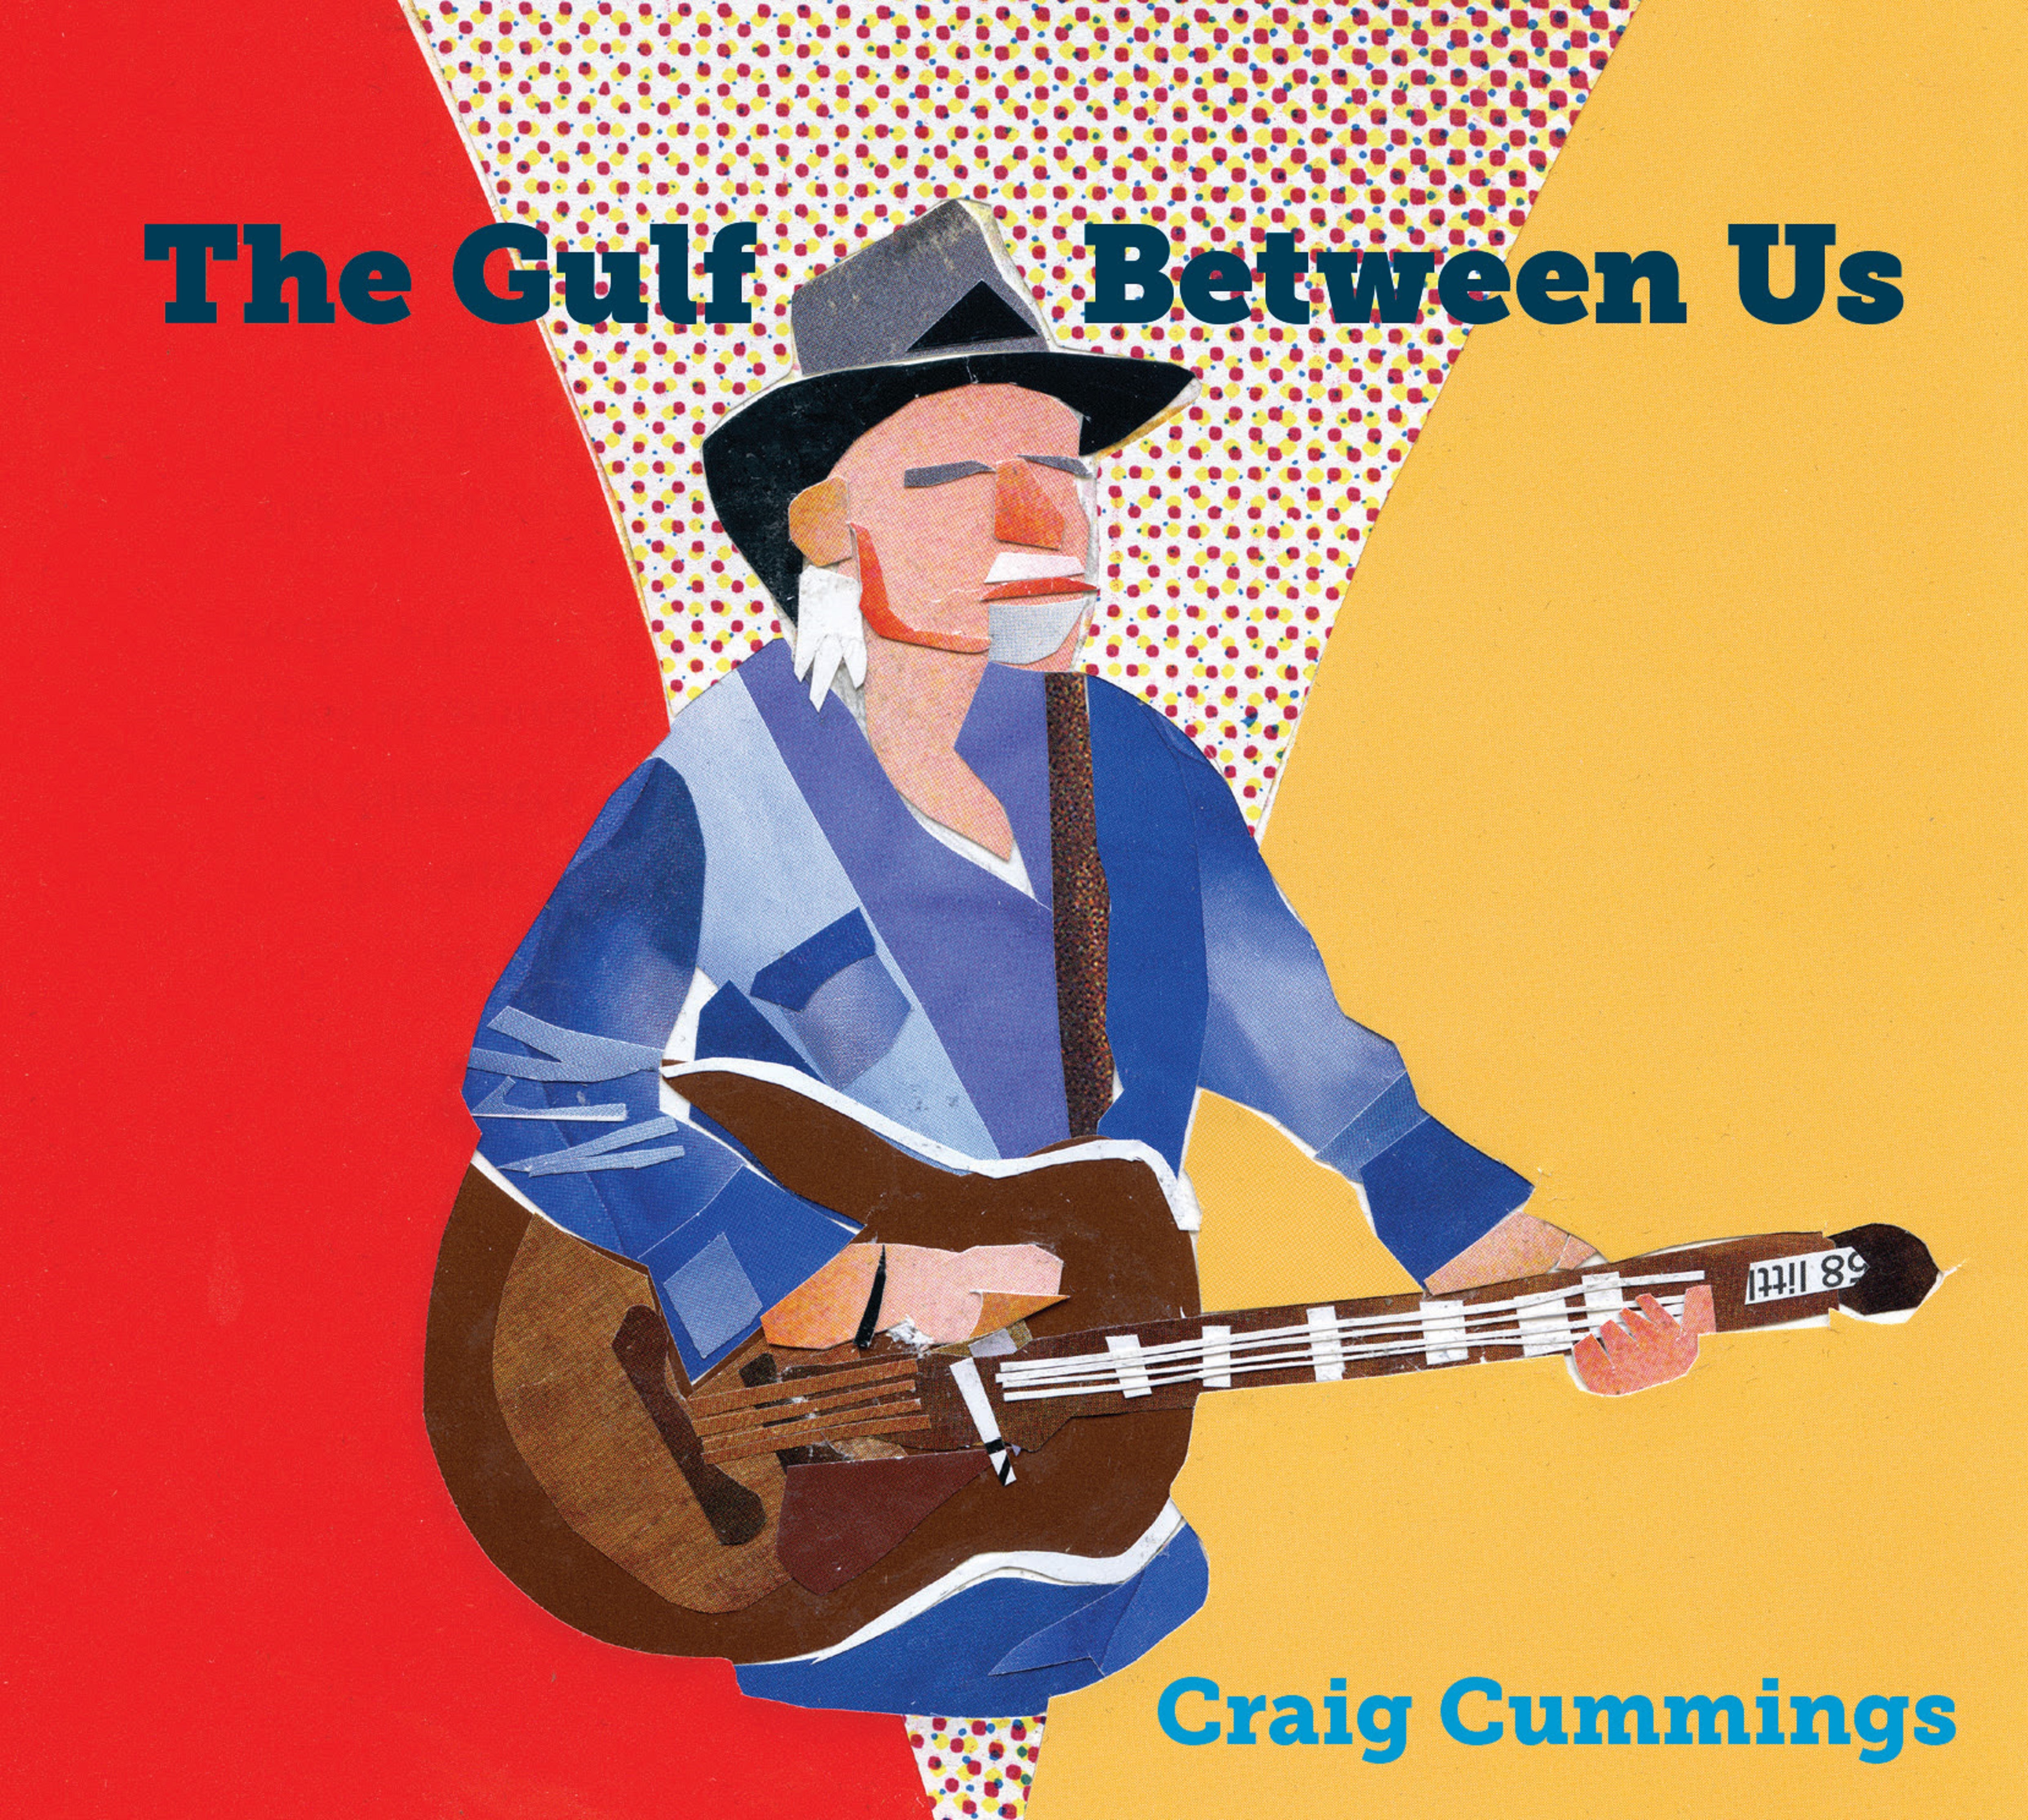 Craig Cummings Releases The Gulf Between Us